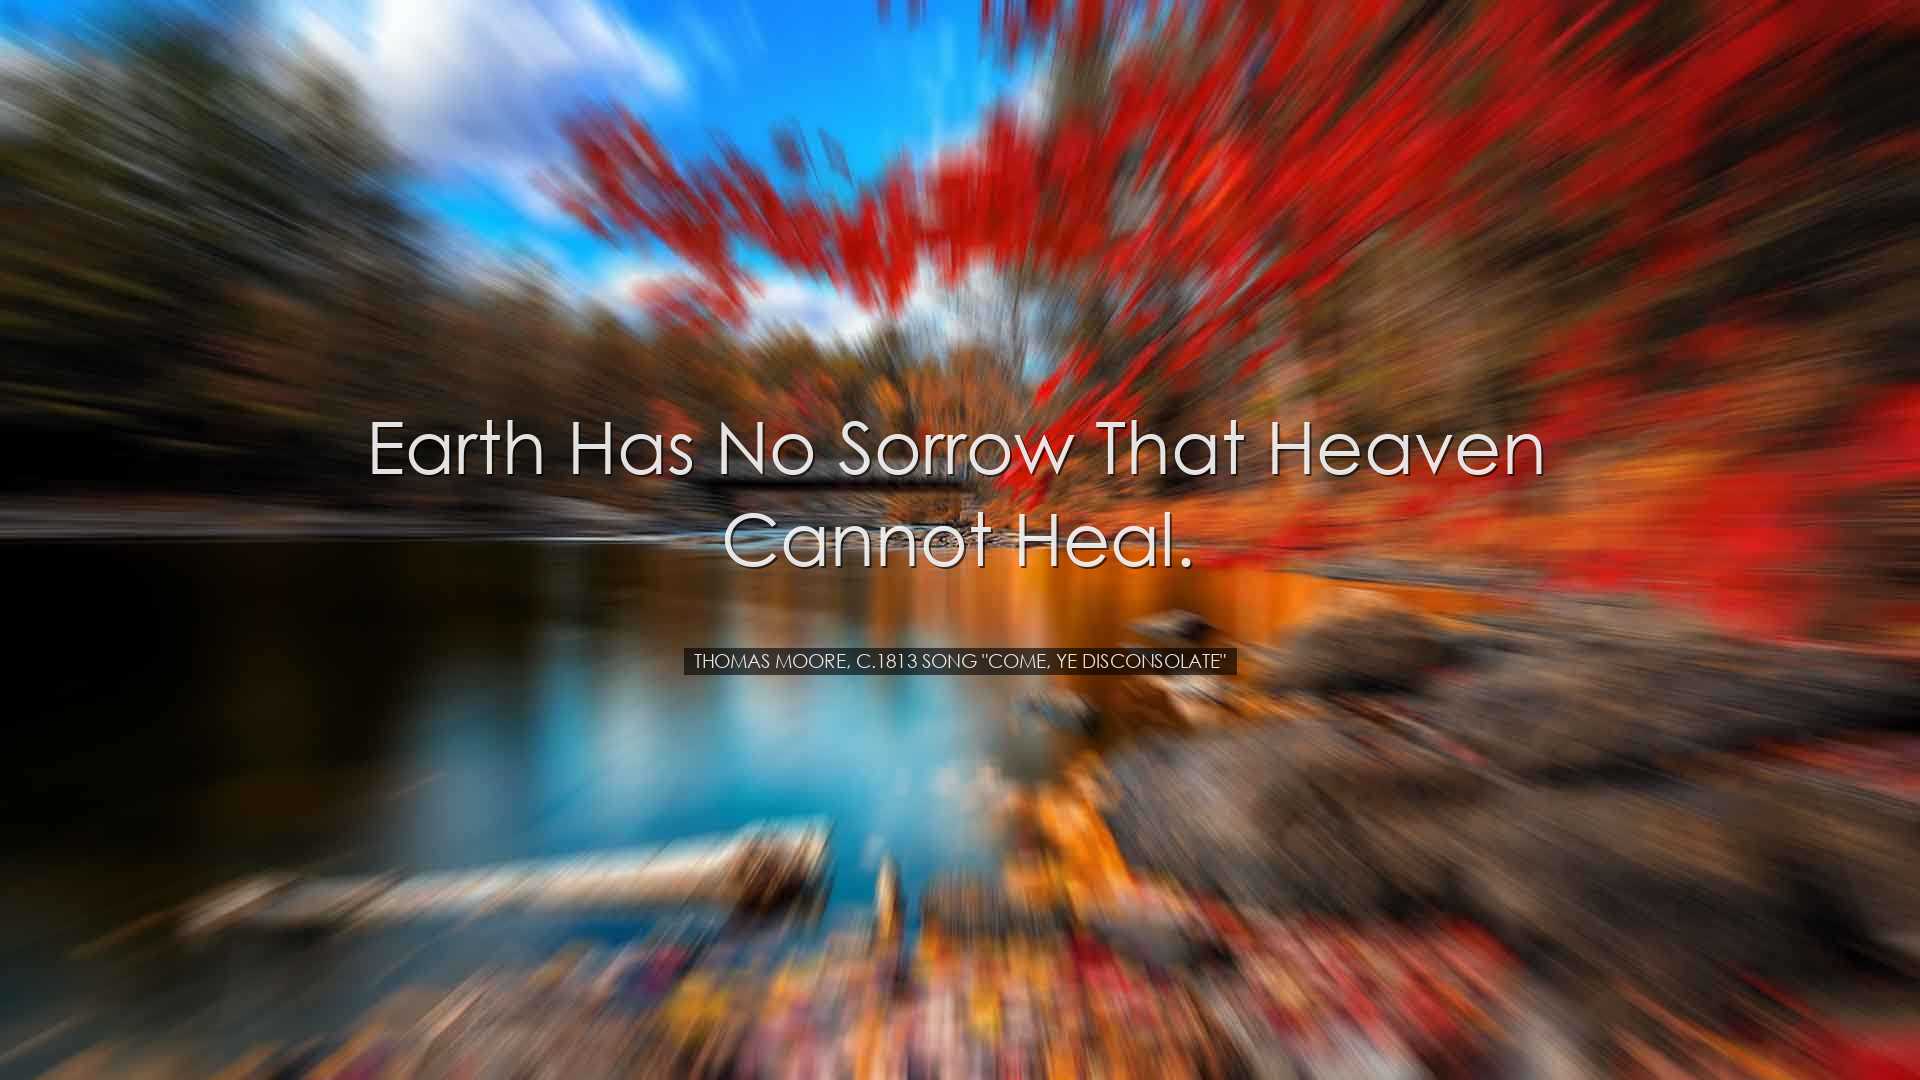 Earth has no sorrow that Heaven cannot heal. - Thomas Moore, c.181